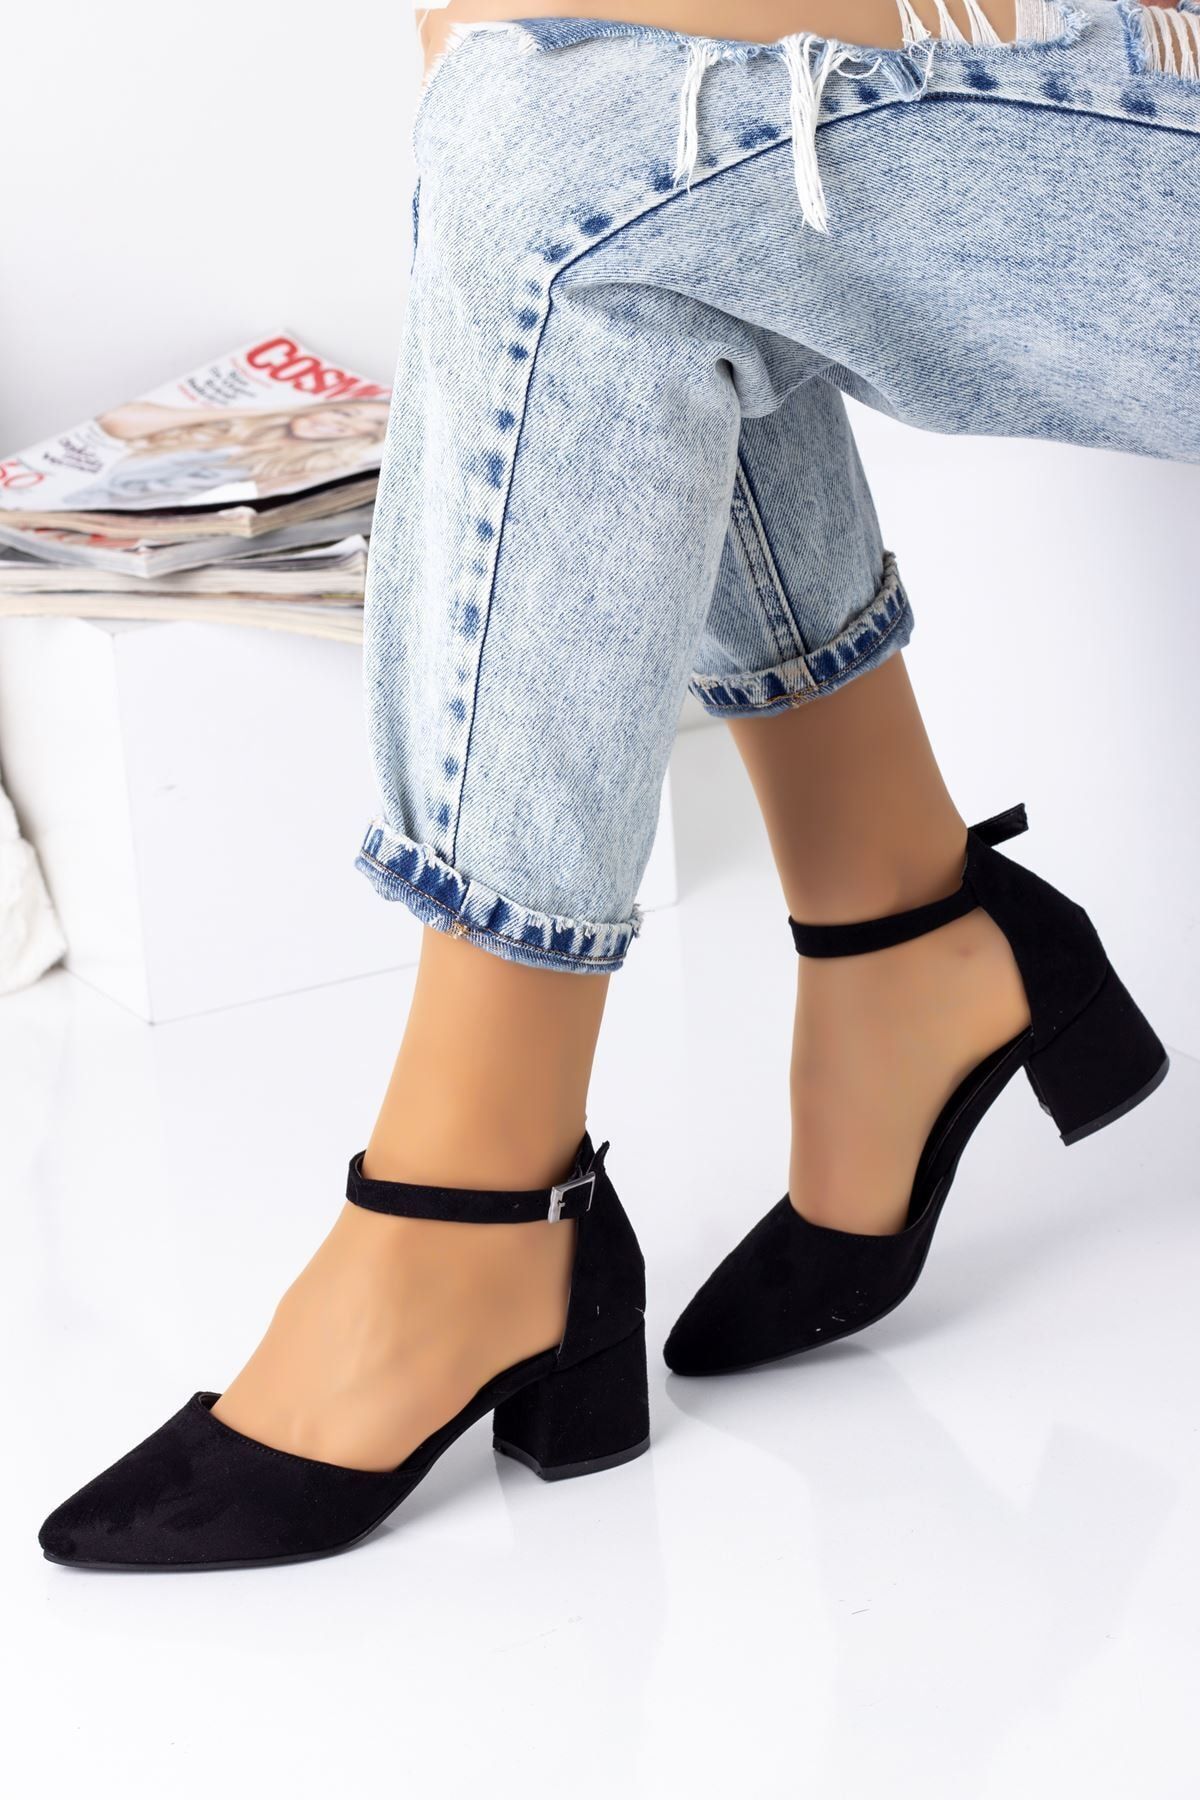 LAL SHOES & BAGS Bilekten Bağlamalı Bayan Topuklu Ayakkabı-s. Siyah